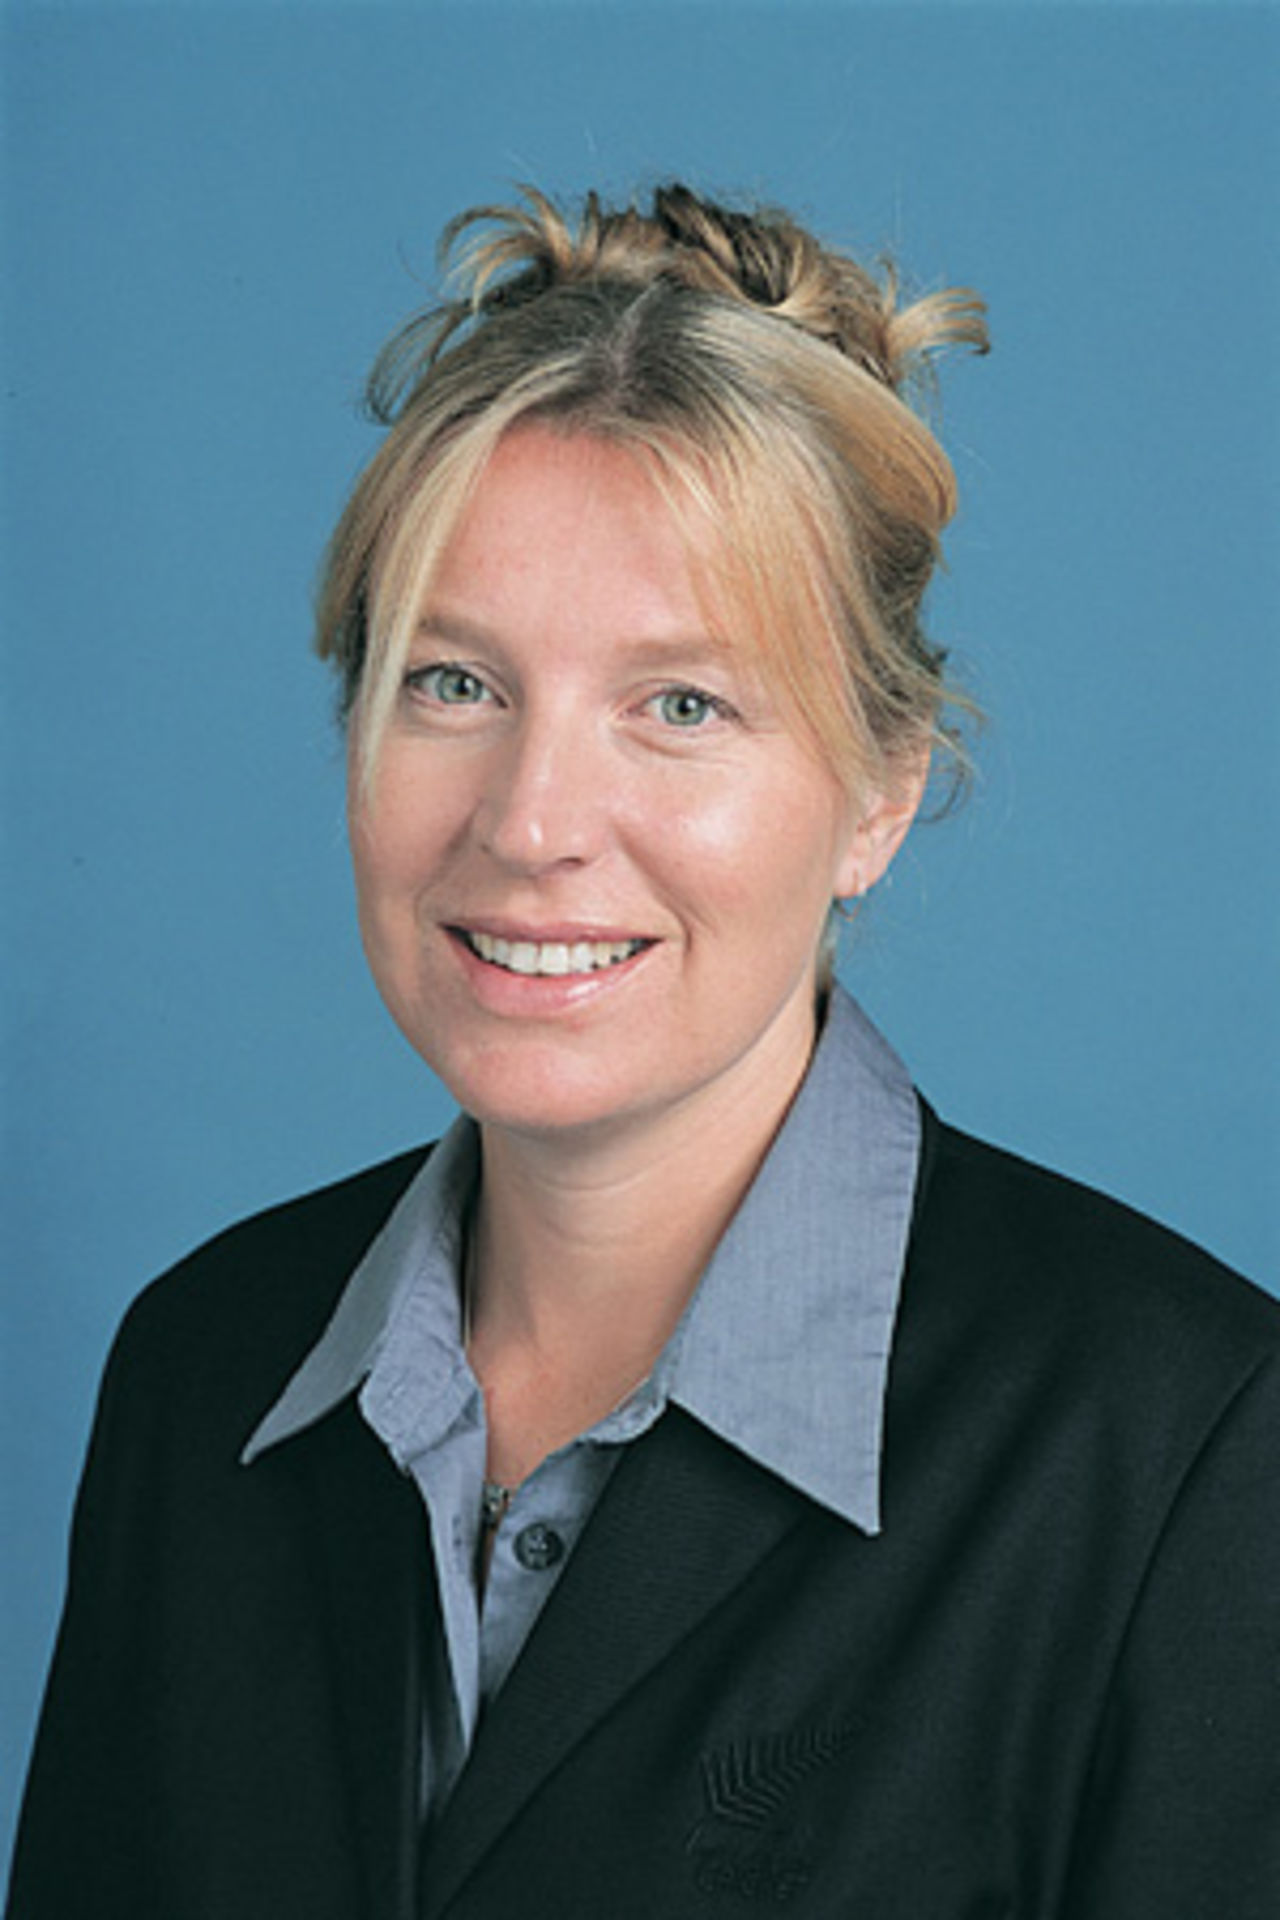 Portrait of Nicola Payne - New Zealand women's player in the 2002 season.